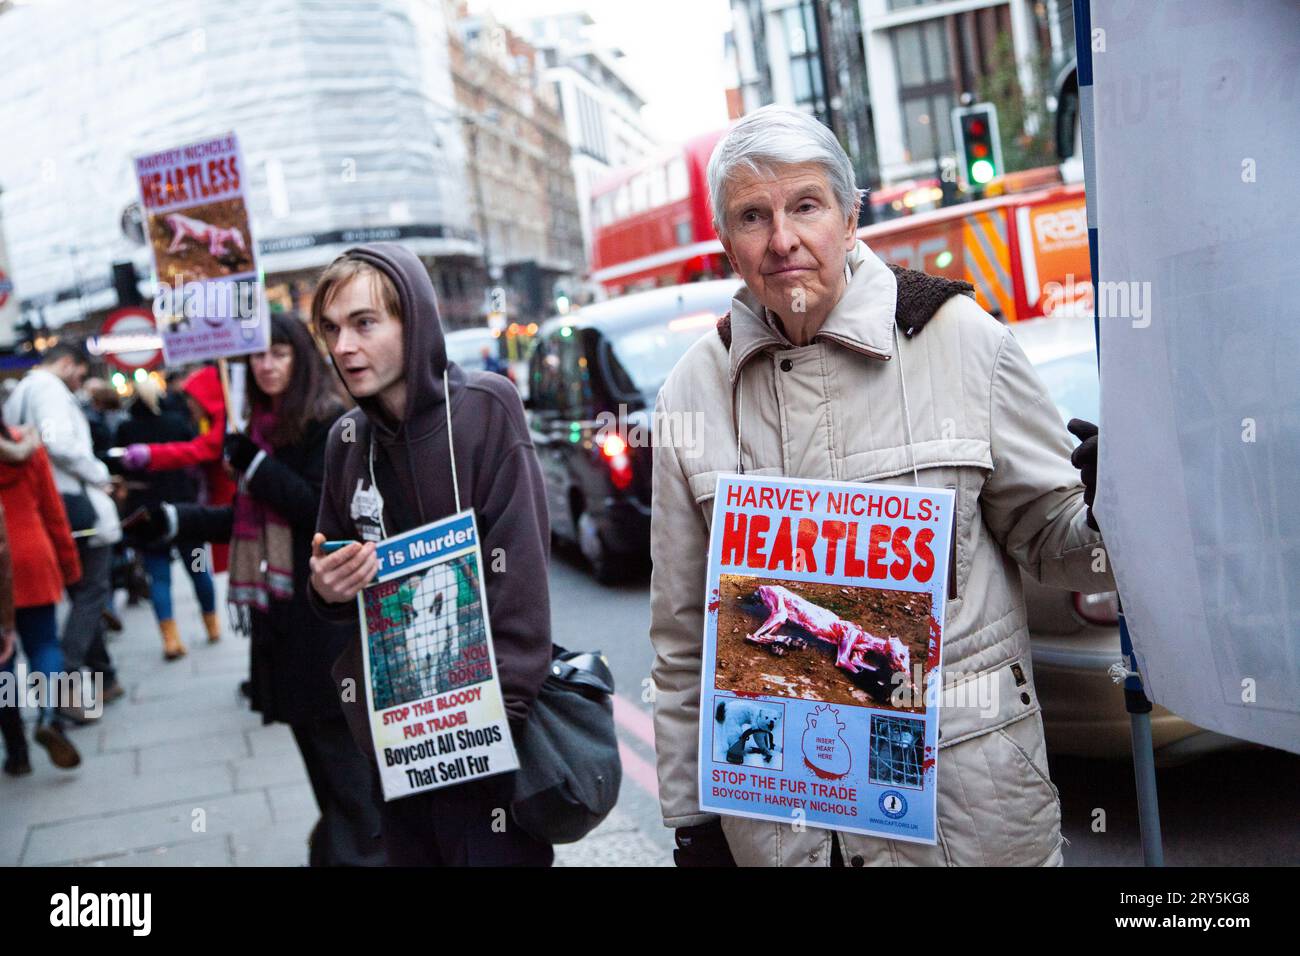 Animal rights anti fur protest outside Harvey Nichols London November 30th 2013 - old man wearing Heartless Harvey Nichols sign Stock Photo